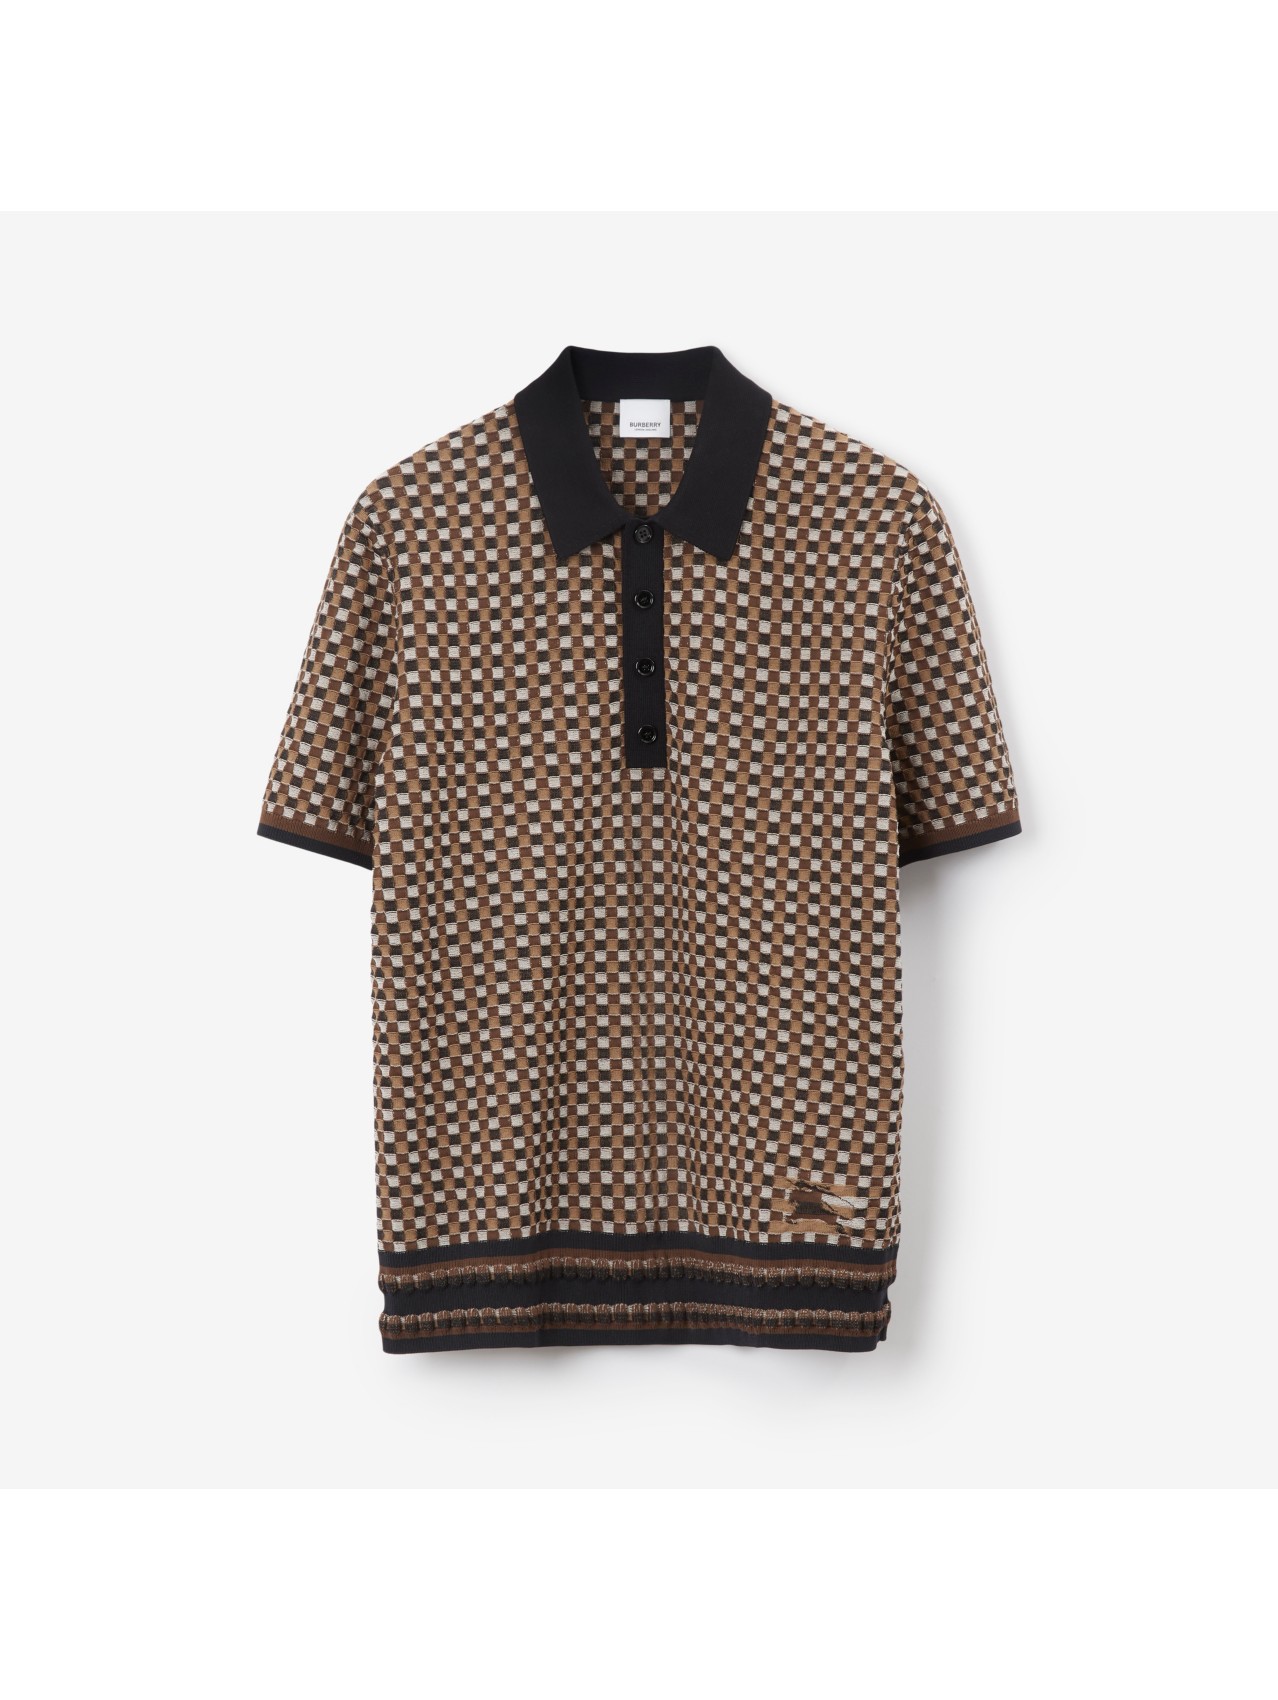 Men's Designer Polo Shirts & T-shirts | Burberry® Official